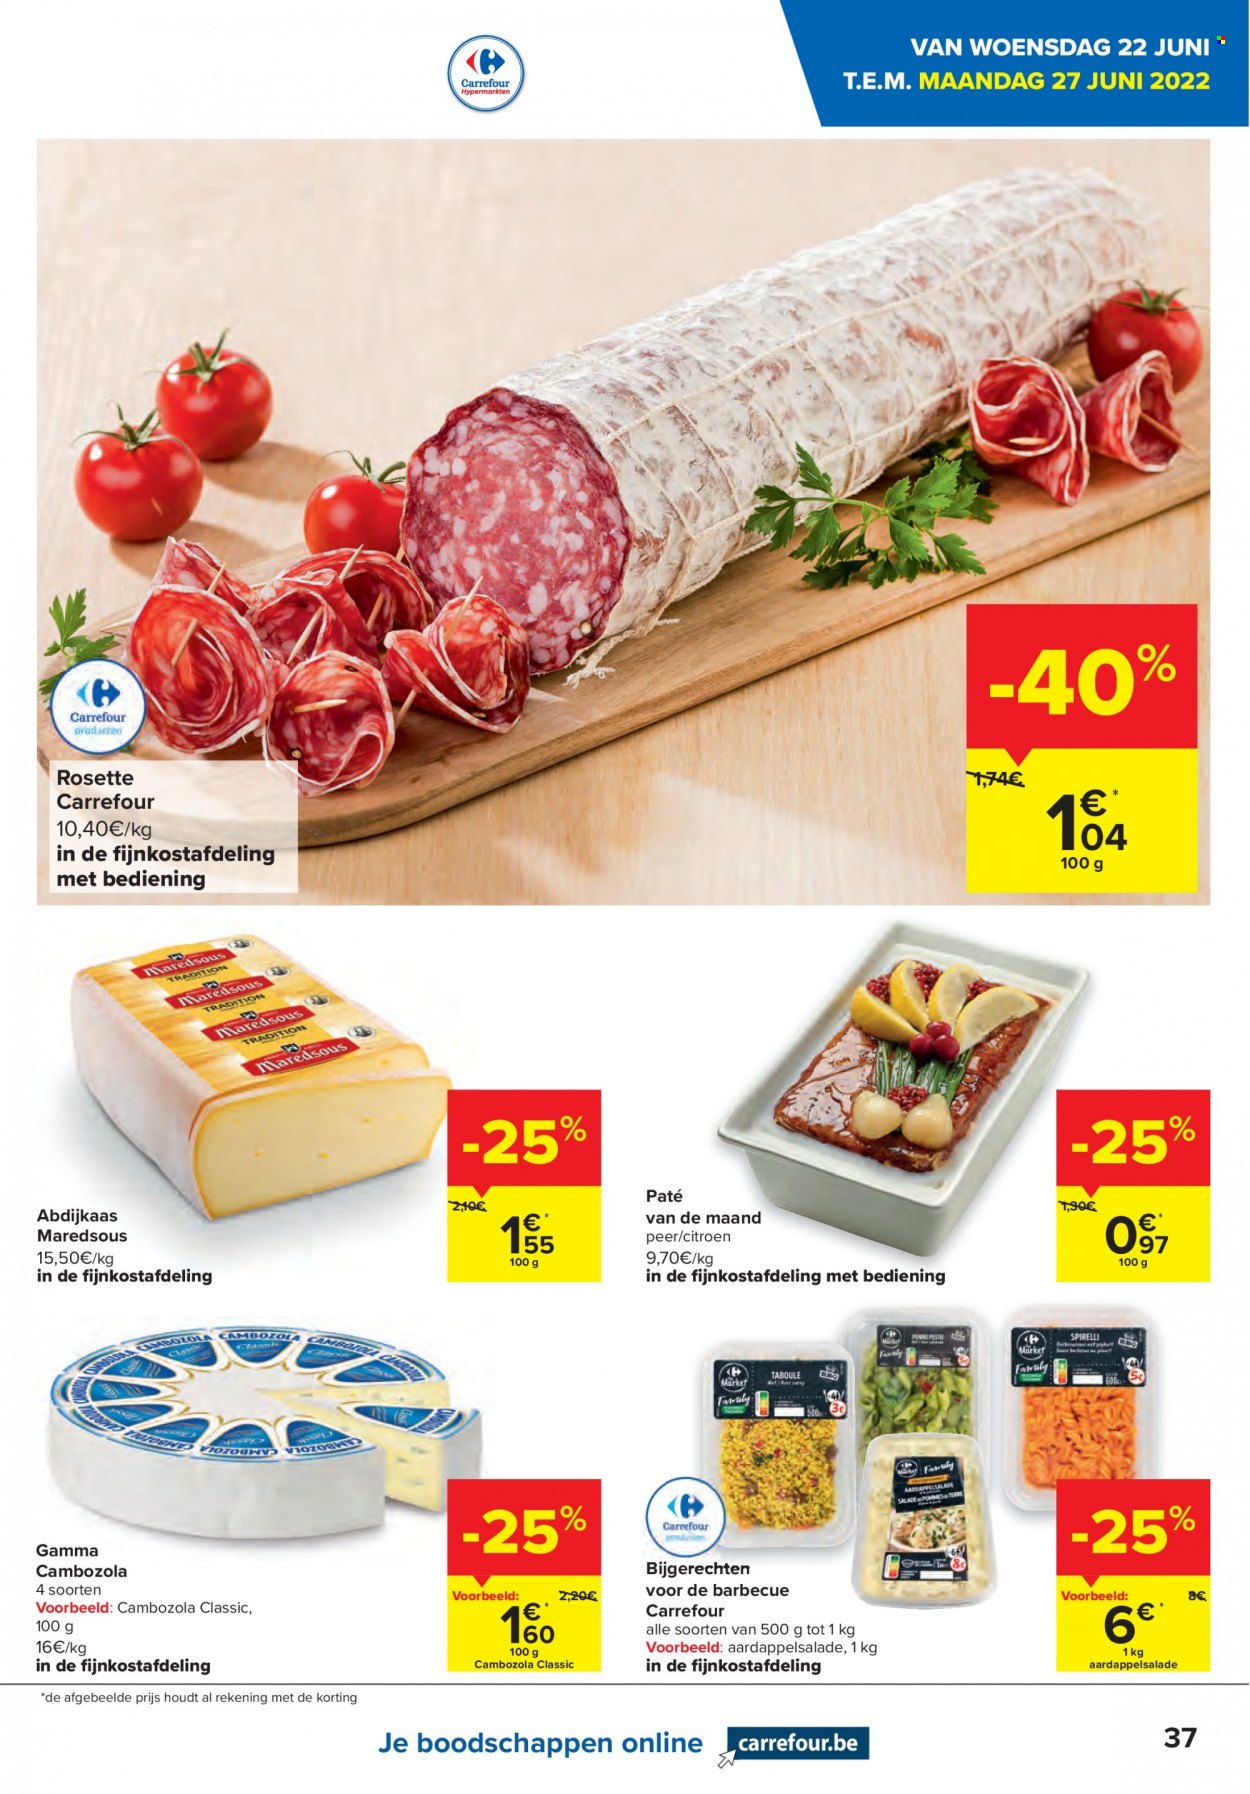 thumbnail - Carrefour hypermarkt-aanbieding - 22/06/2022 - 04/07/2022 -  producten in de aanbieding - Gamma, citroen, peer, paté, penne, BBQ. Pagina 37.